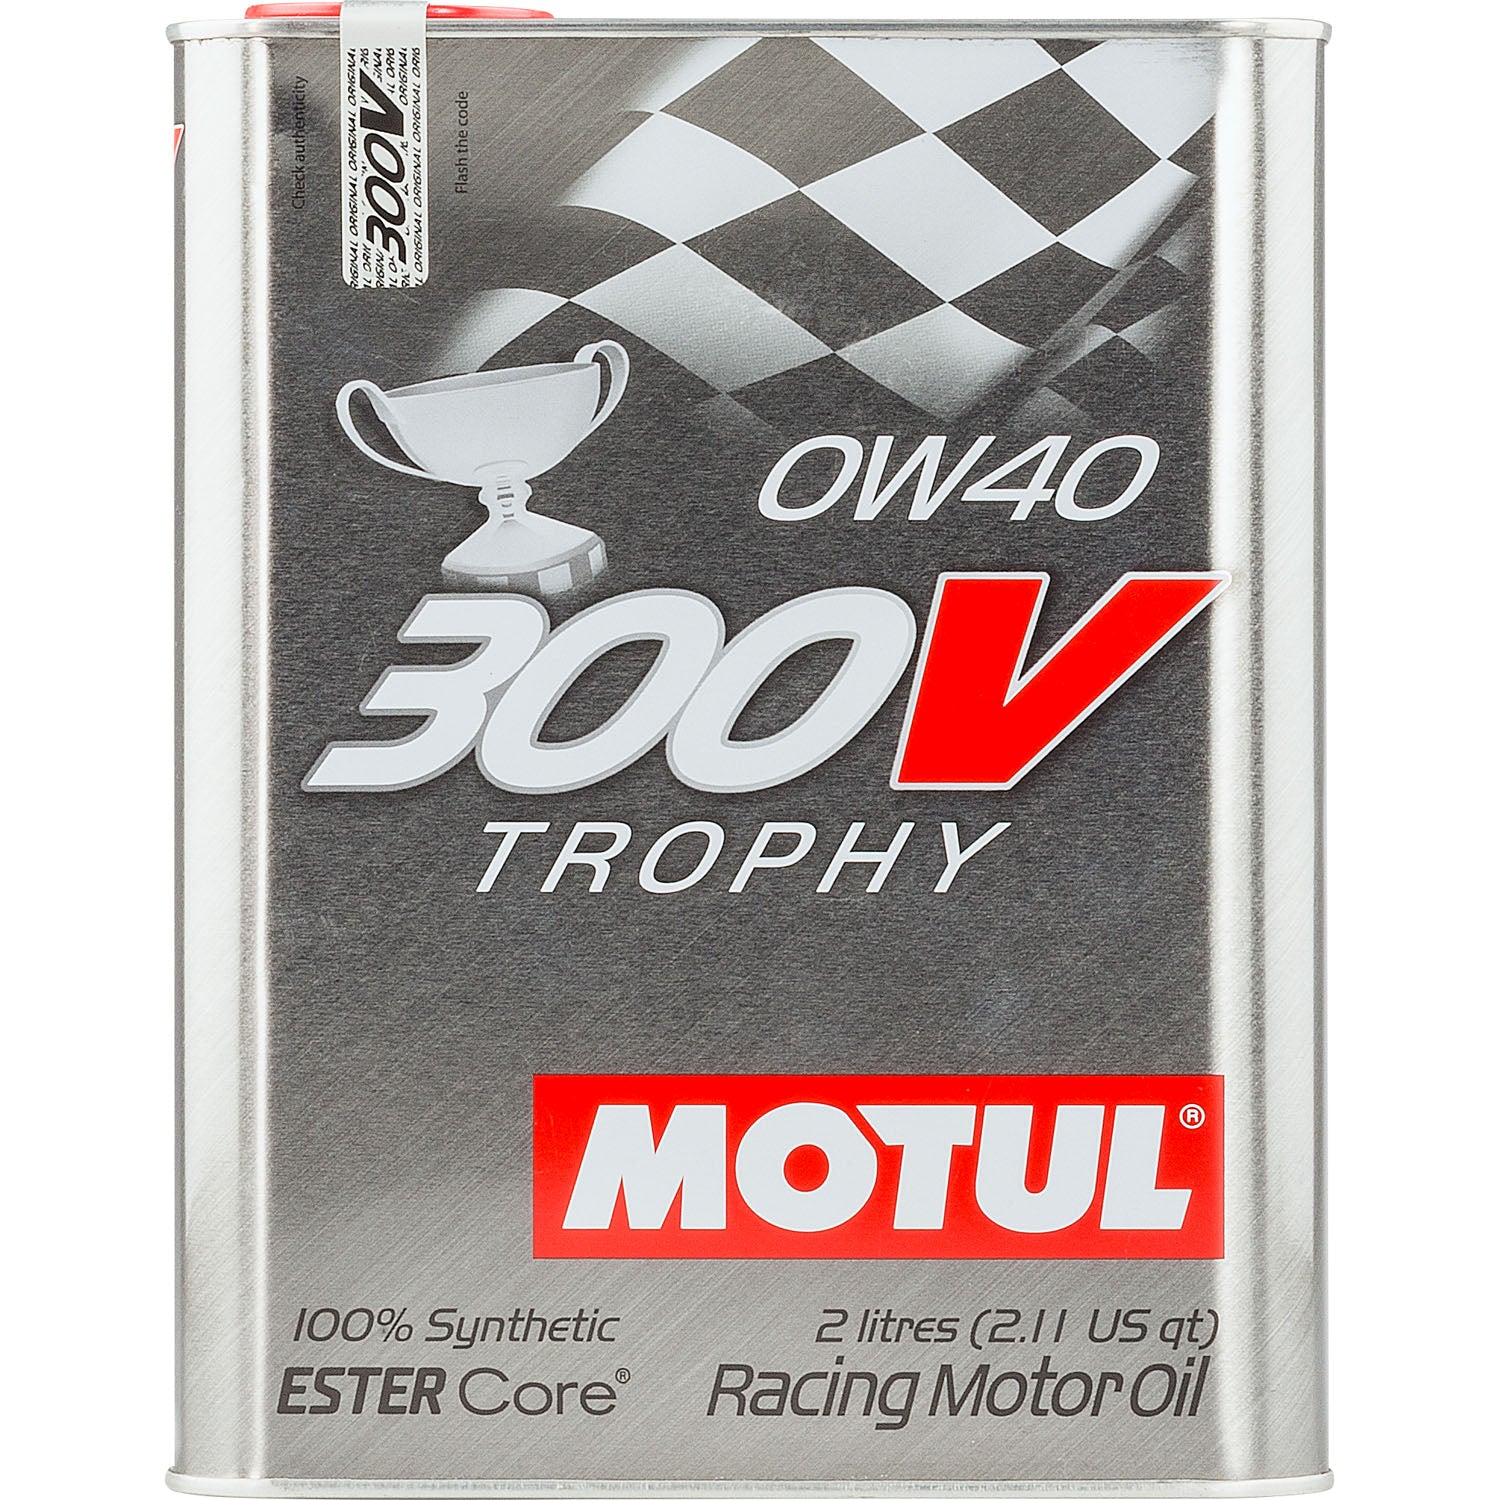 Motul 300V Trophy Racing Motor Oil 0W40 - 2 Liter